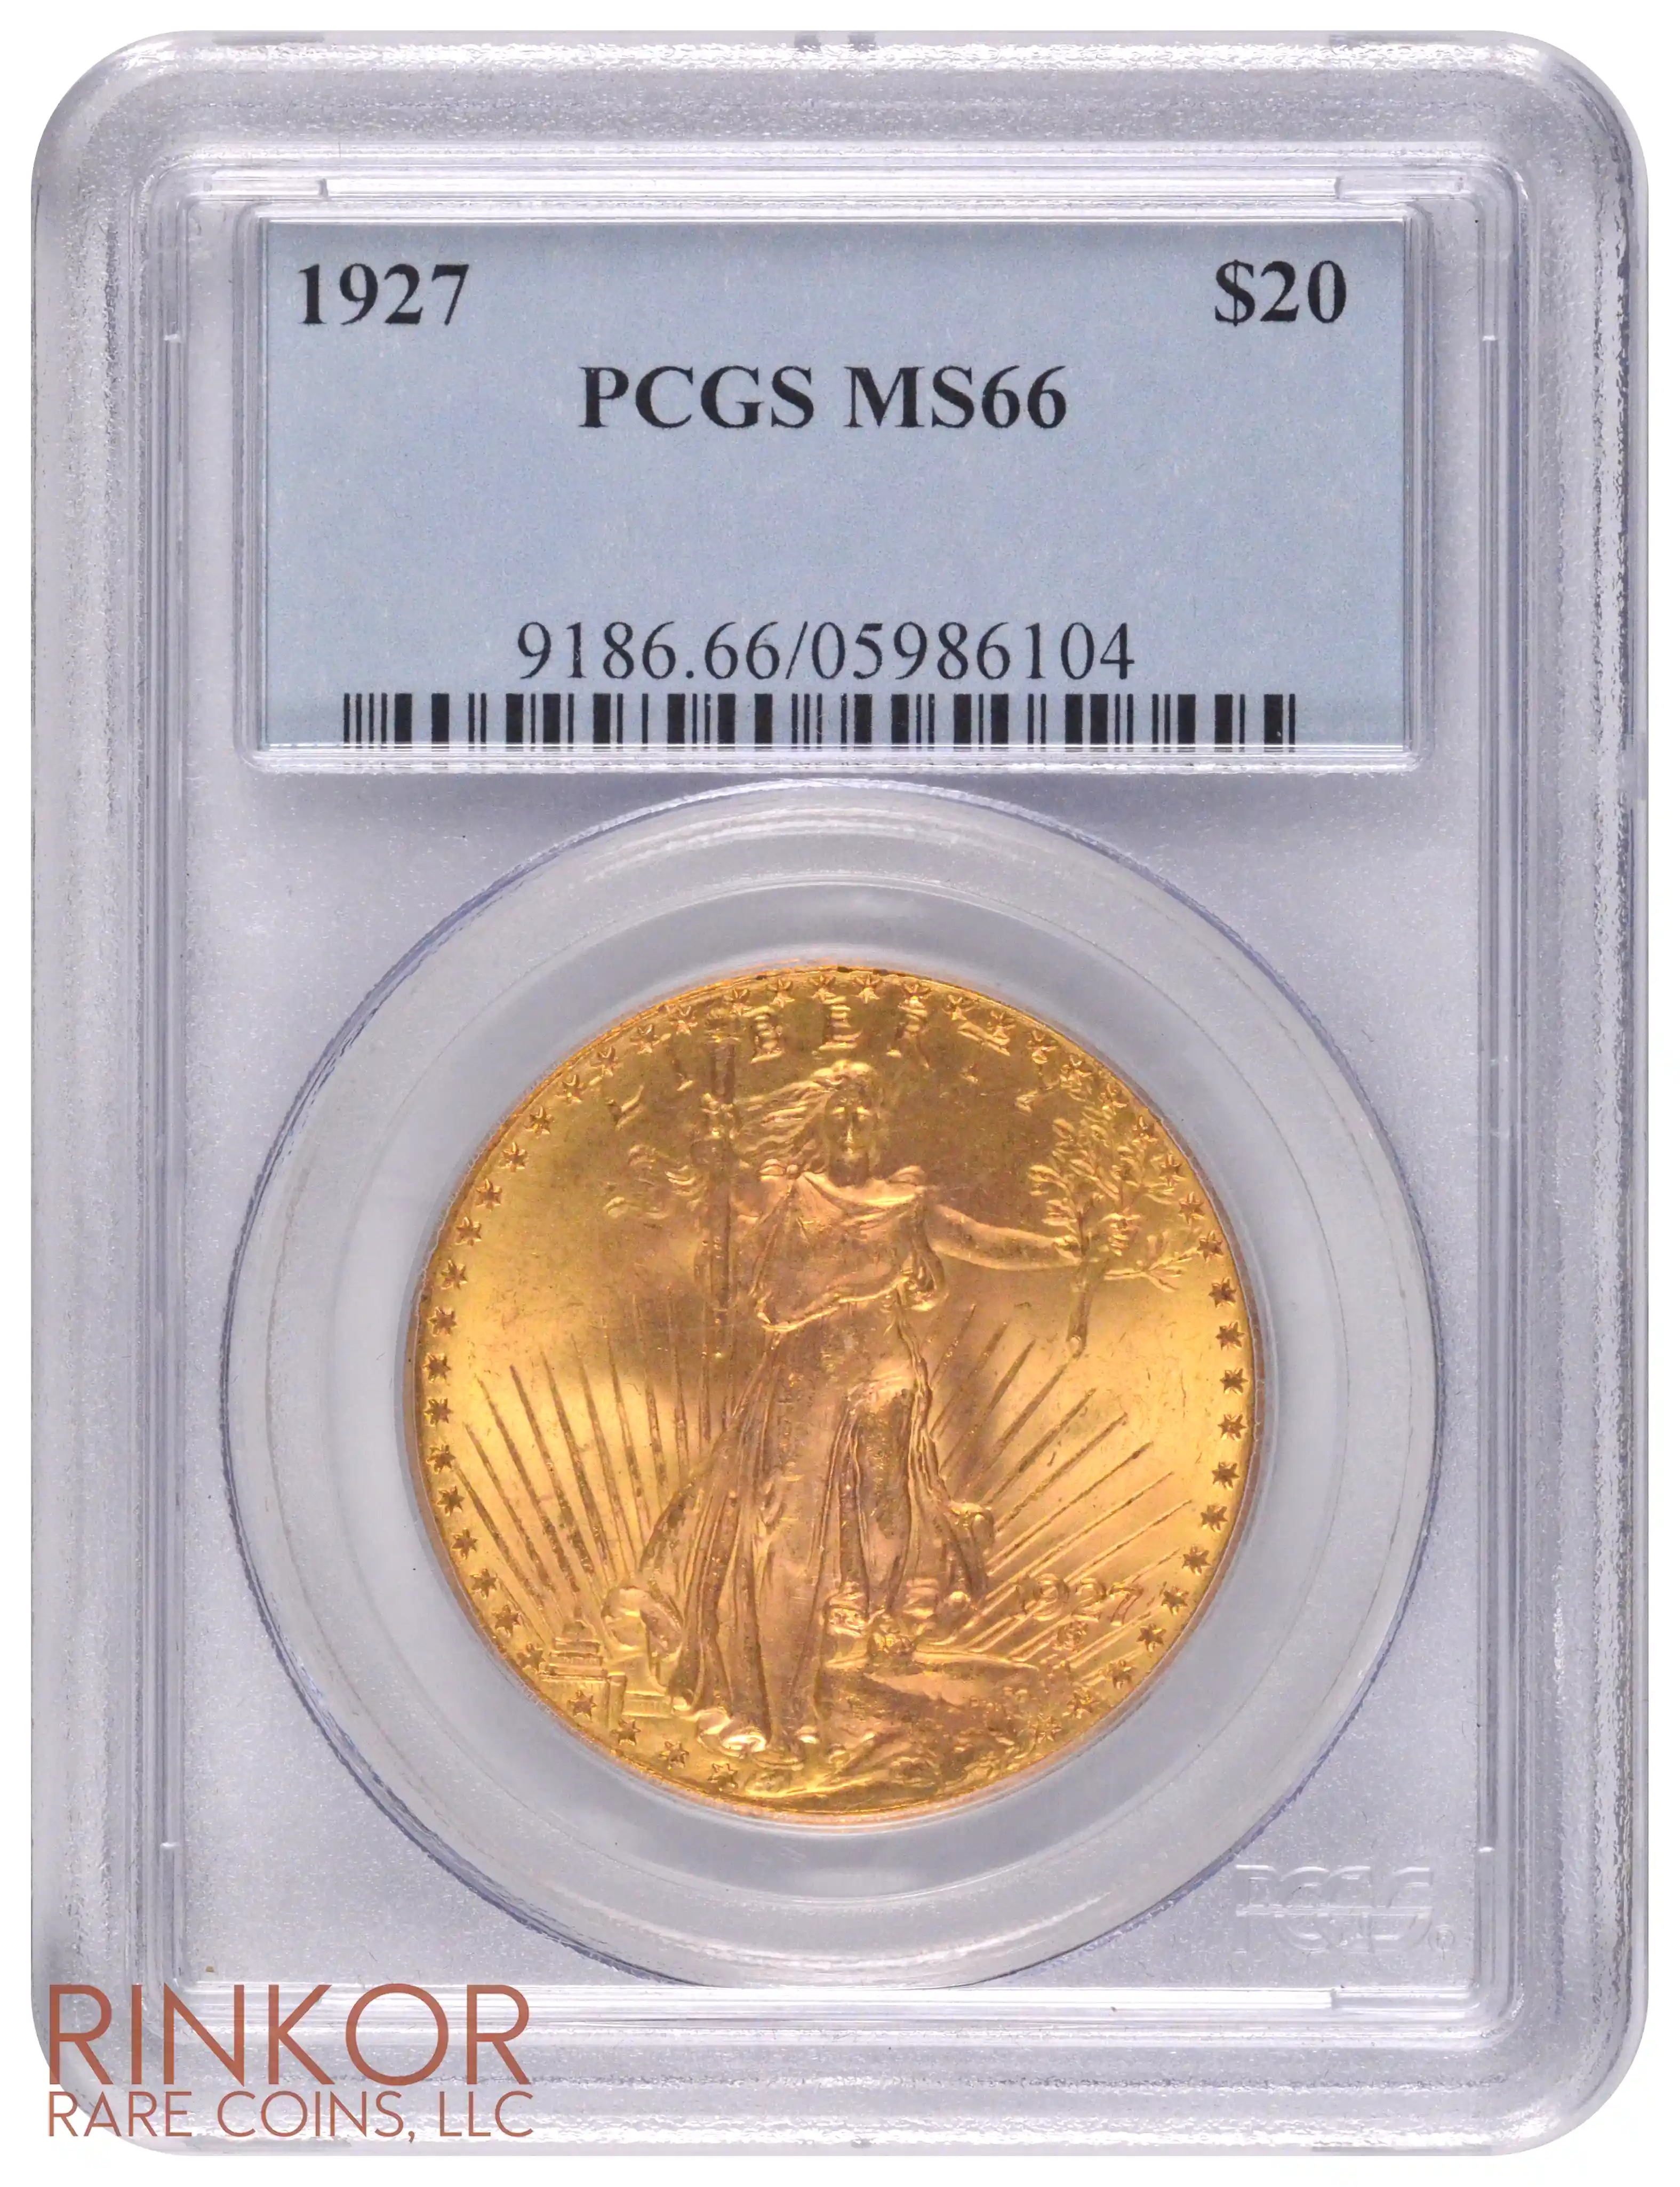 1927 Saint Gaudens $20 PCGS MS 66